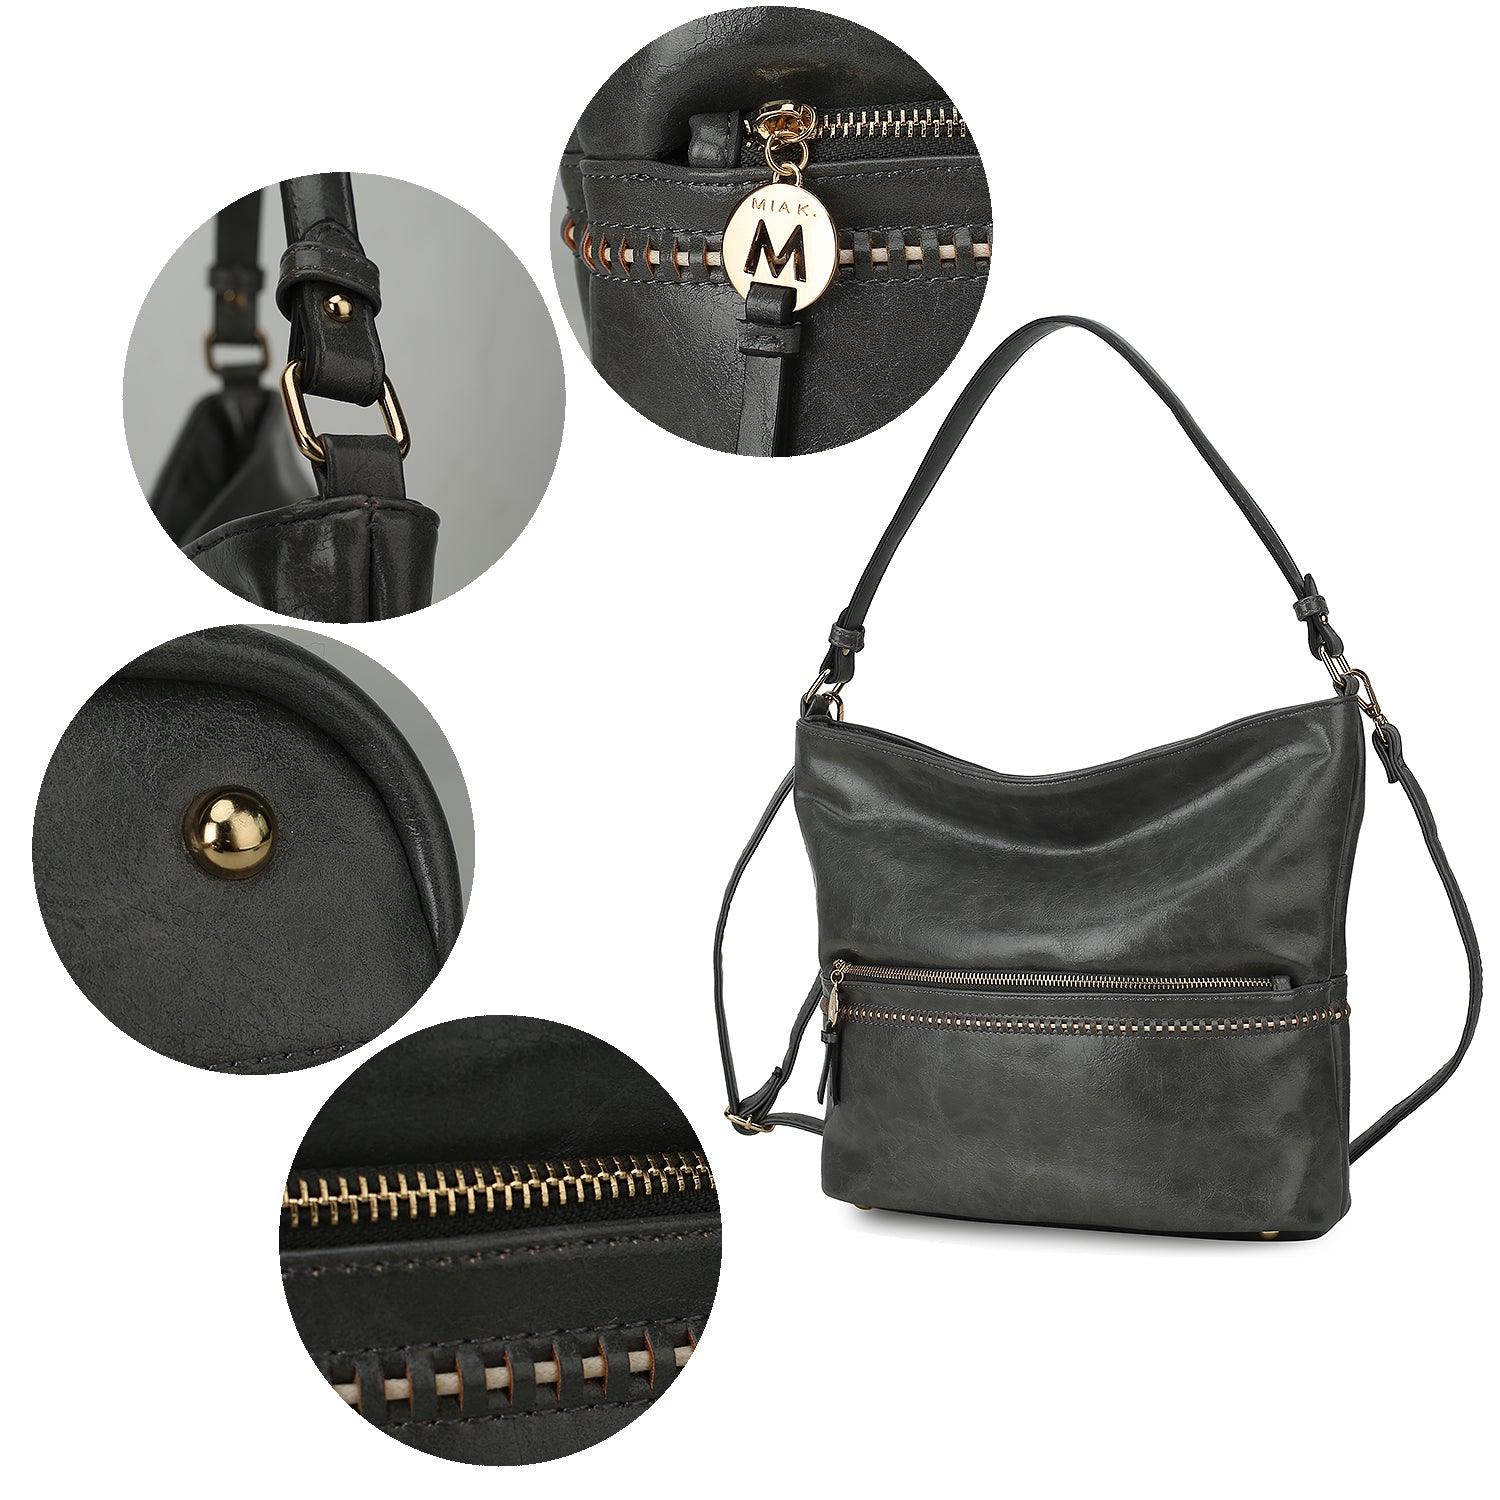 Wallets, Handbags & Accessories Sierra Vegan Leather Women’s Shoulder Bag